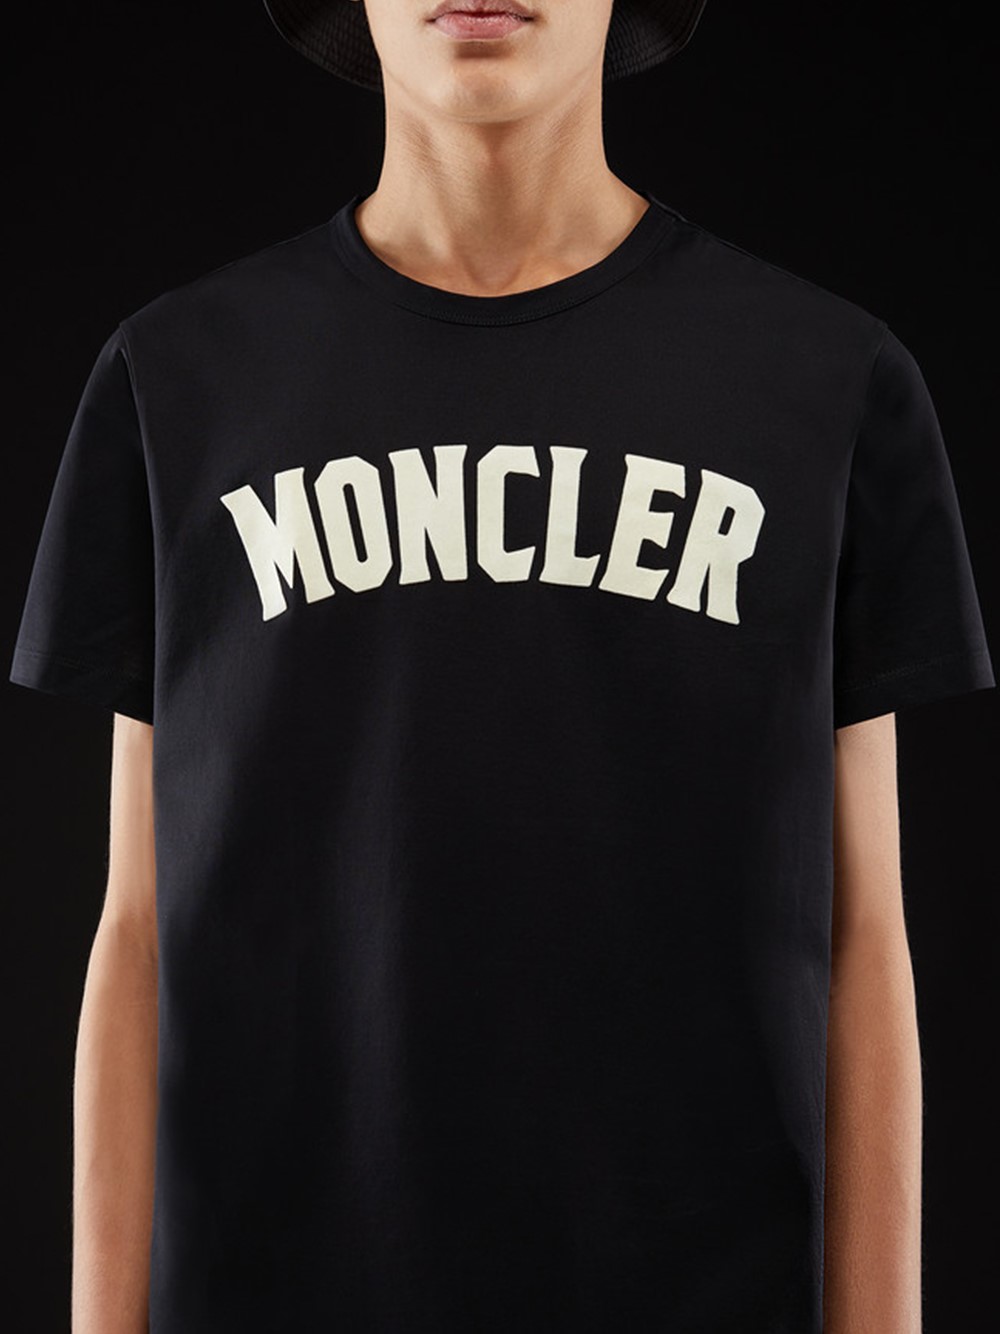 moncler genius MONCLER GENIUS 2 LOGO T-SHIRT: MONCLER 1962 available on ...